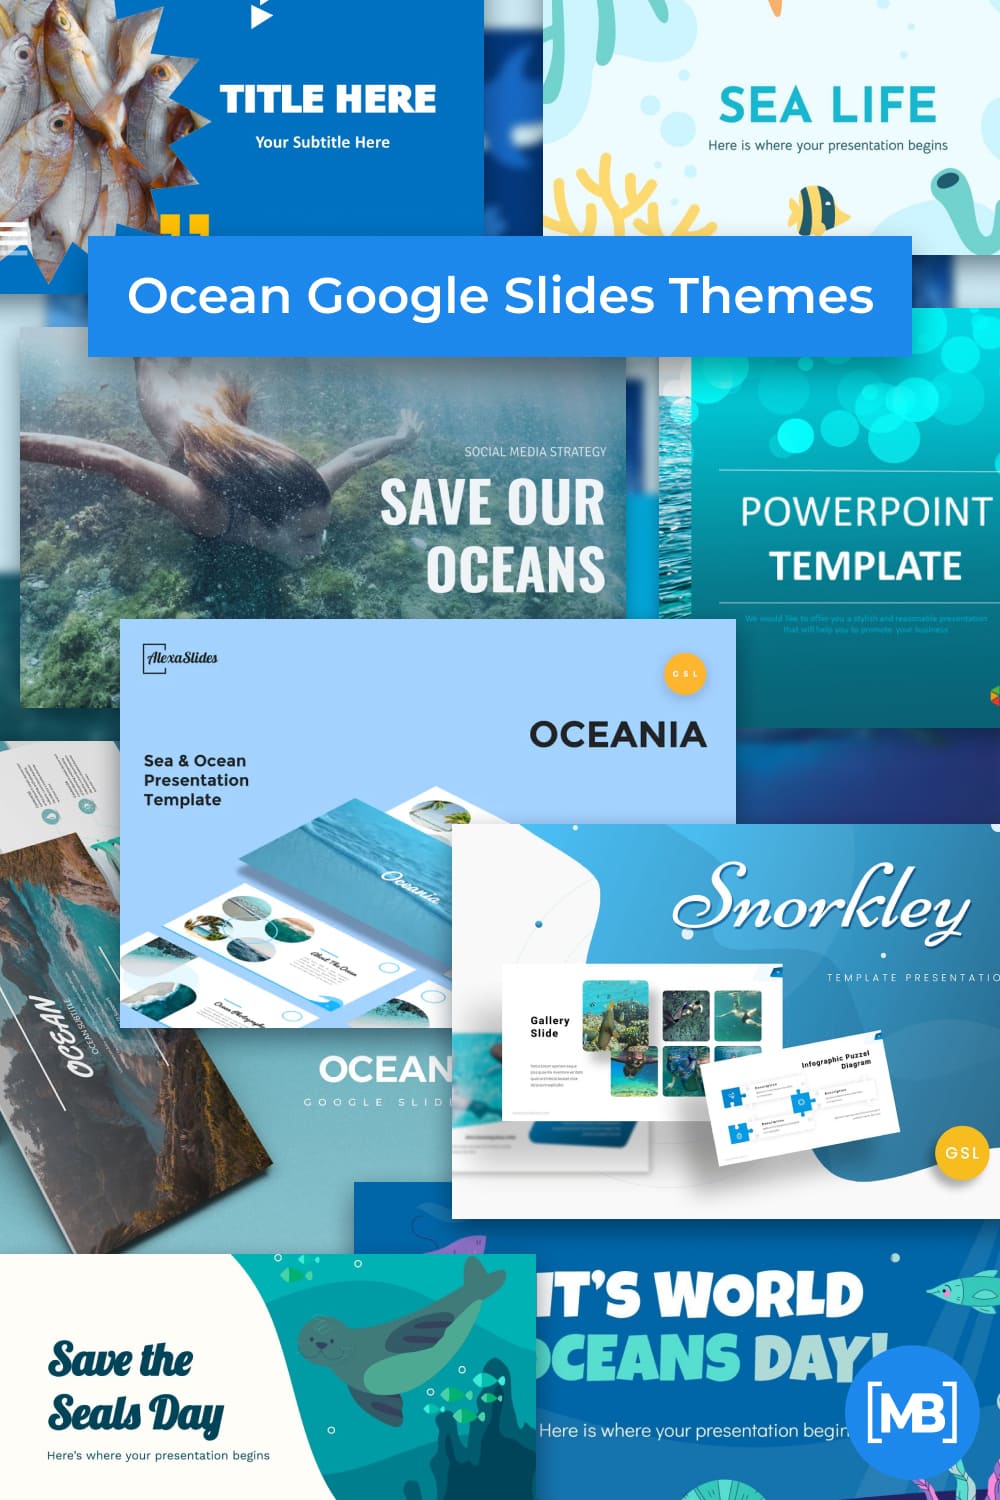 Ocean Google Slides Themes Pinterest.